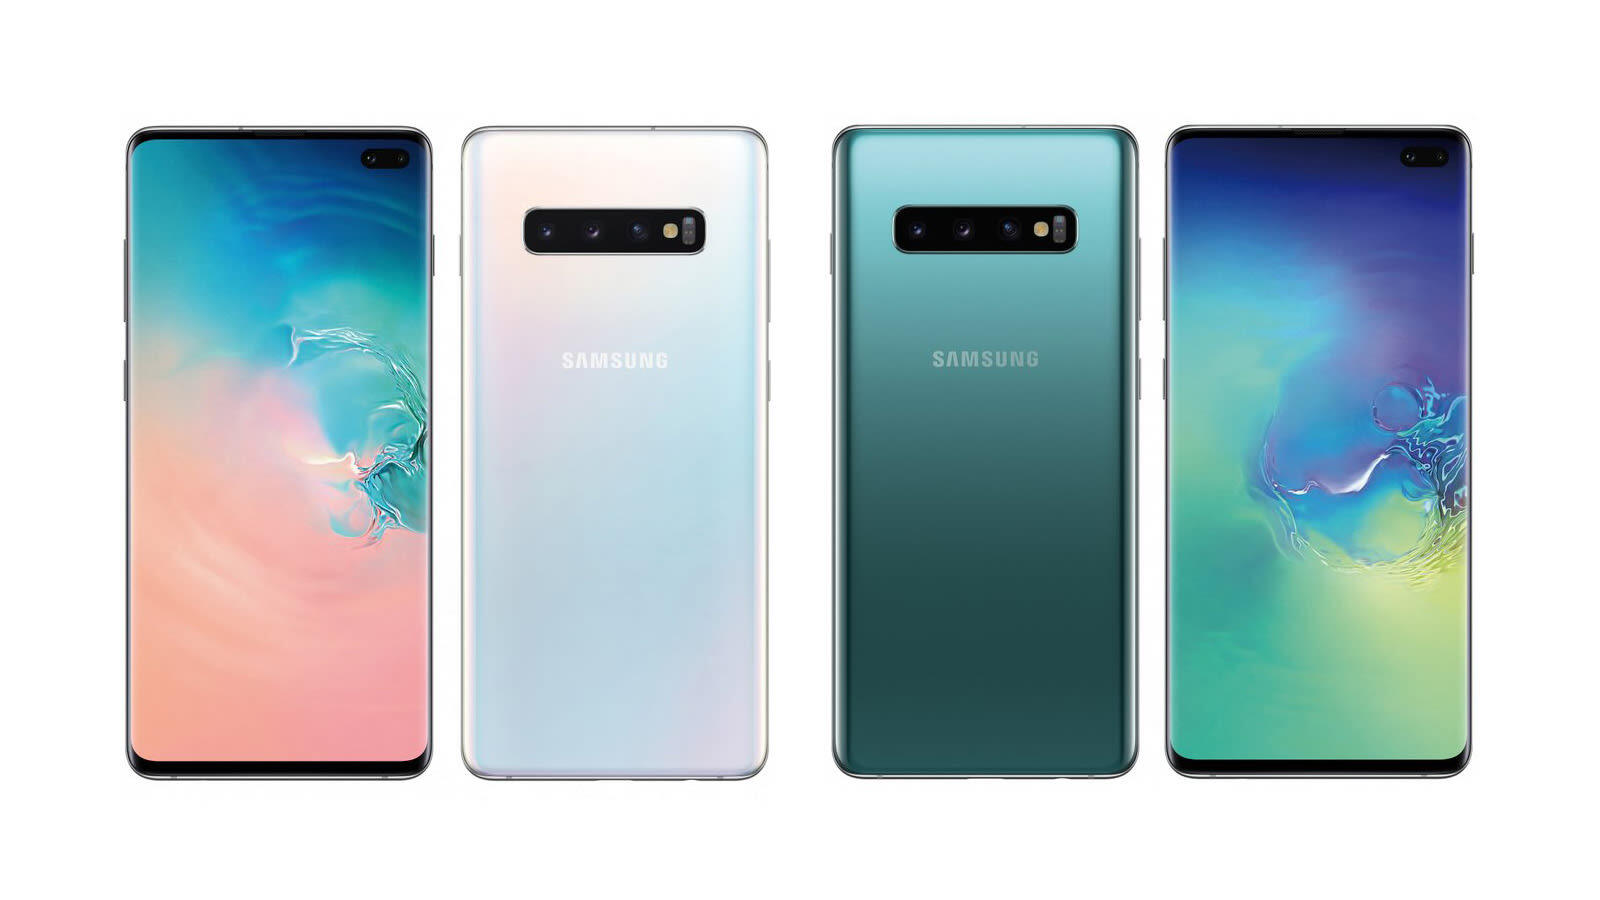 Samsung Galaxy S10 Plus Цена В Москве